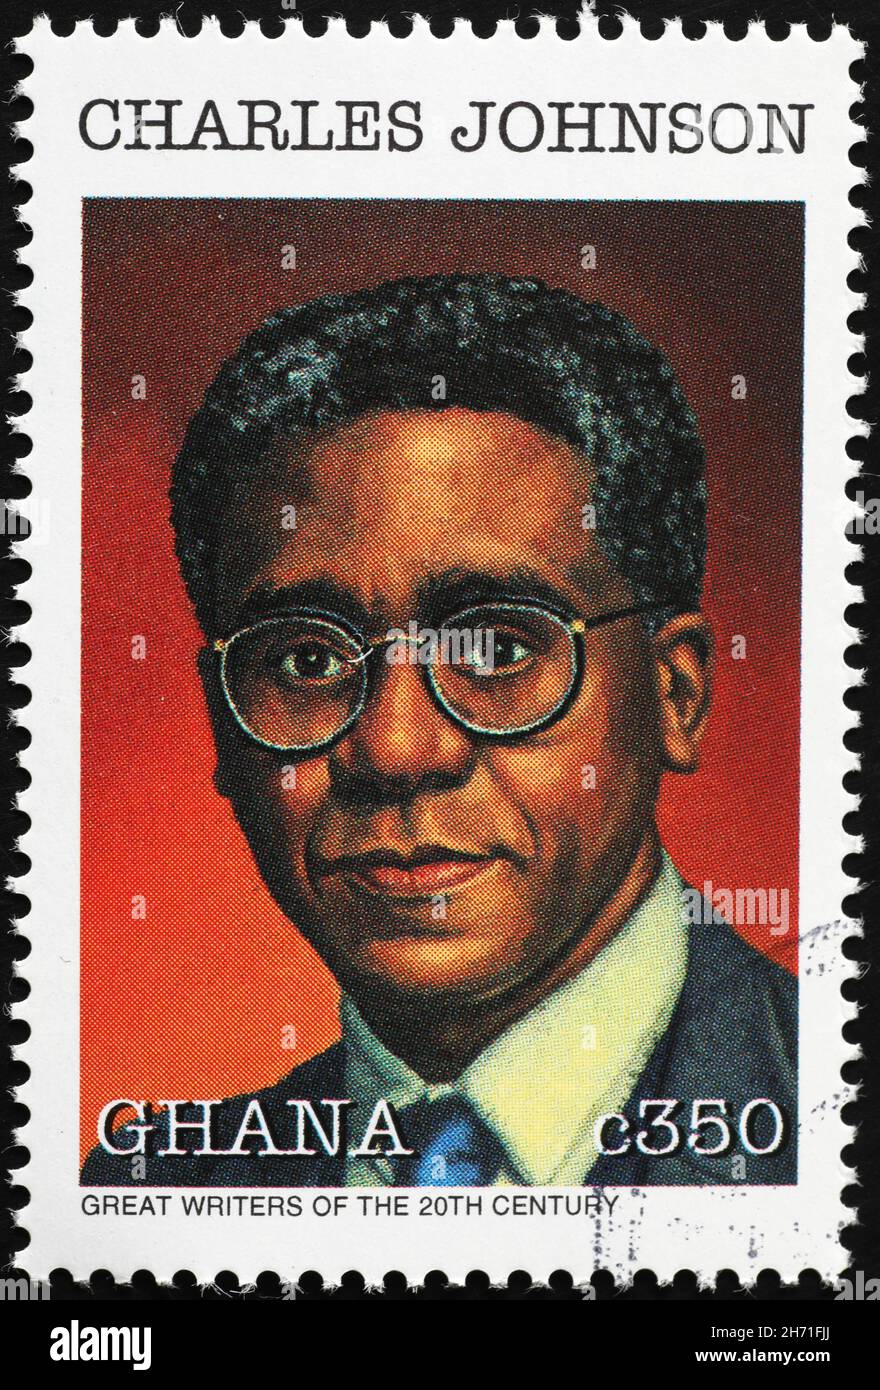 Charles Richard Johnson portrait on postage stamp Stock Photo